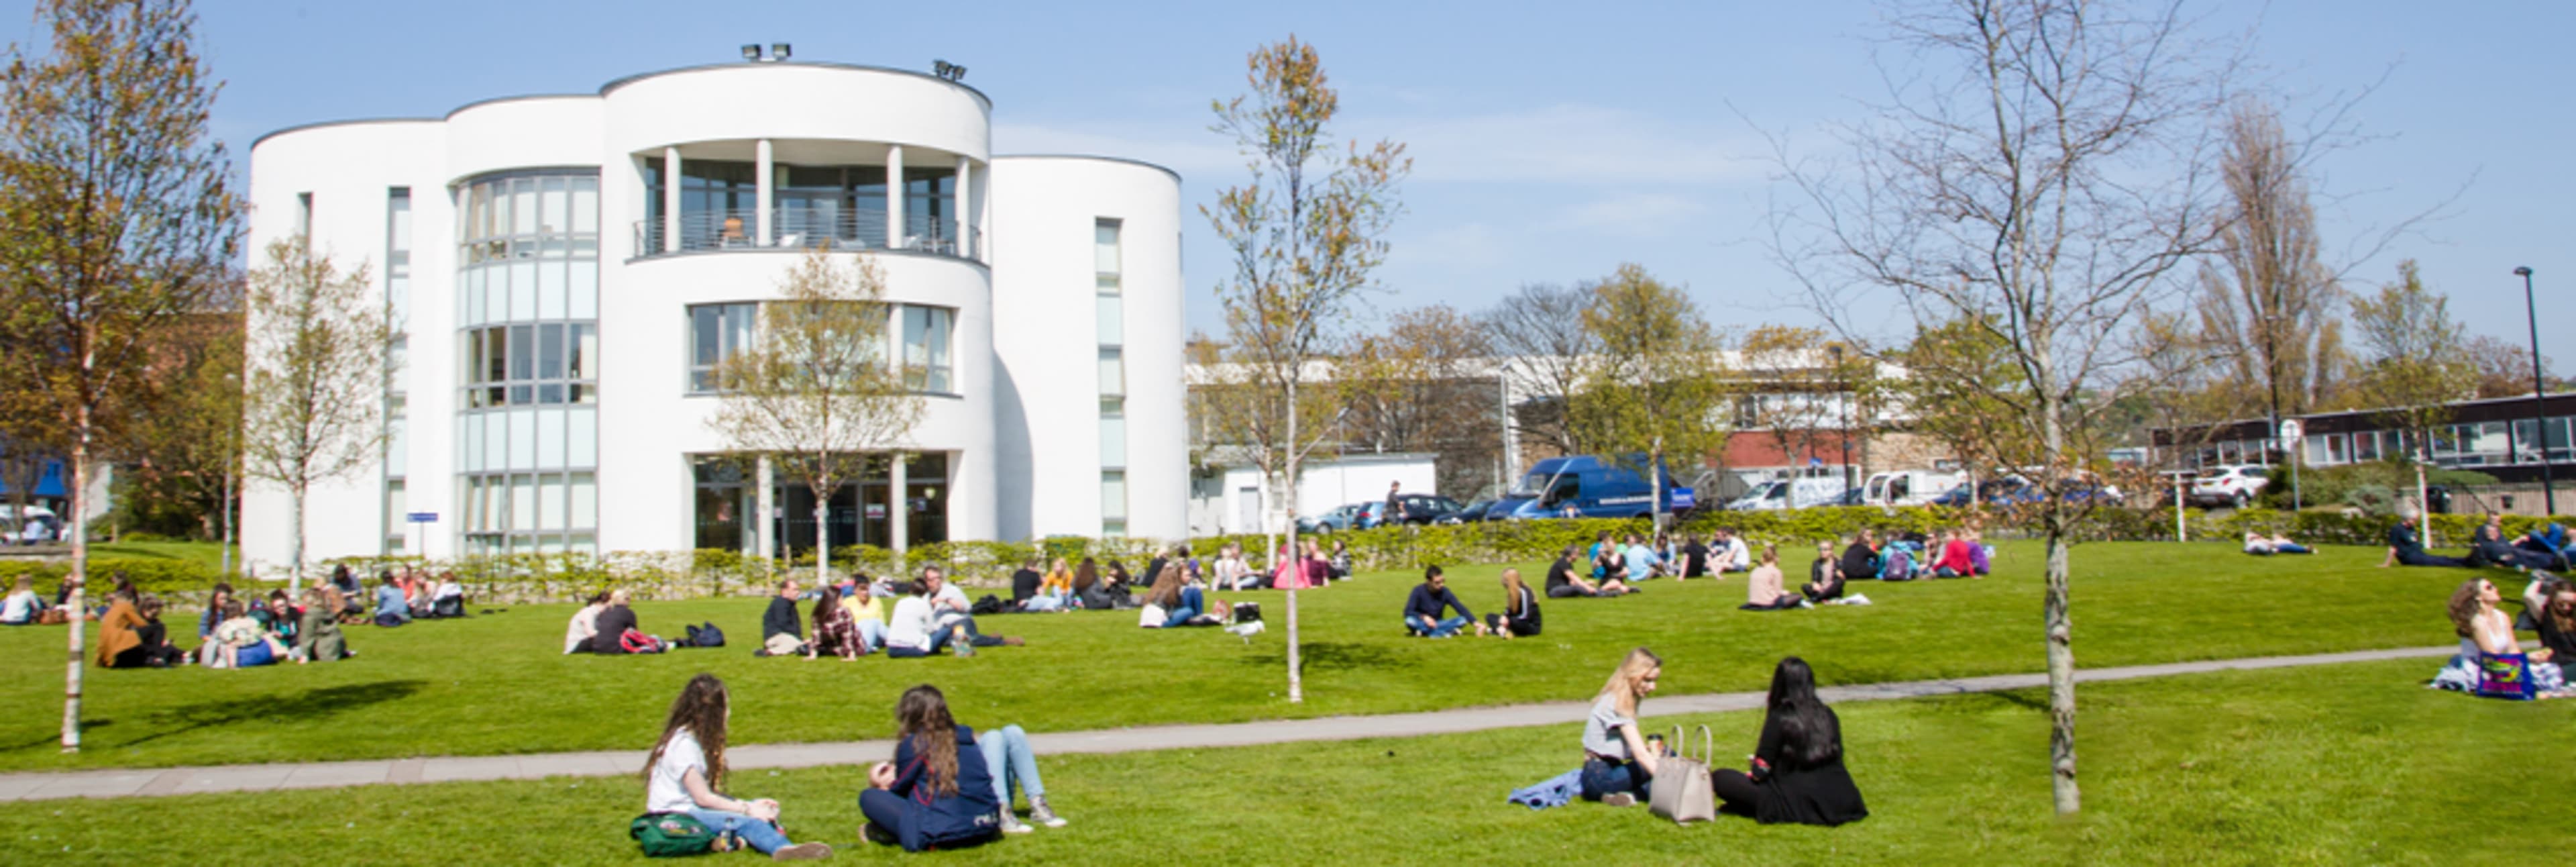 Dundee University campus